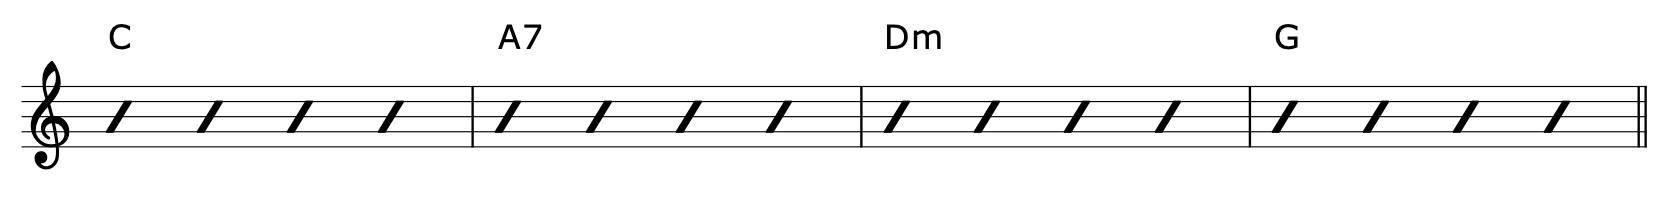 Secondary Dominant Chord Progression 4